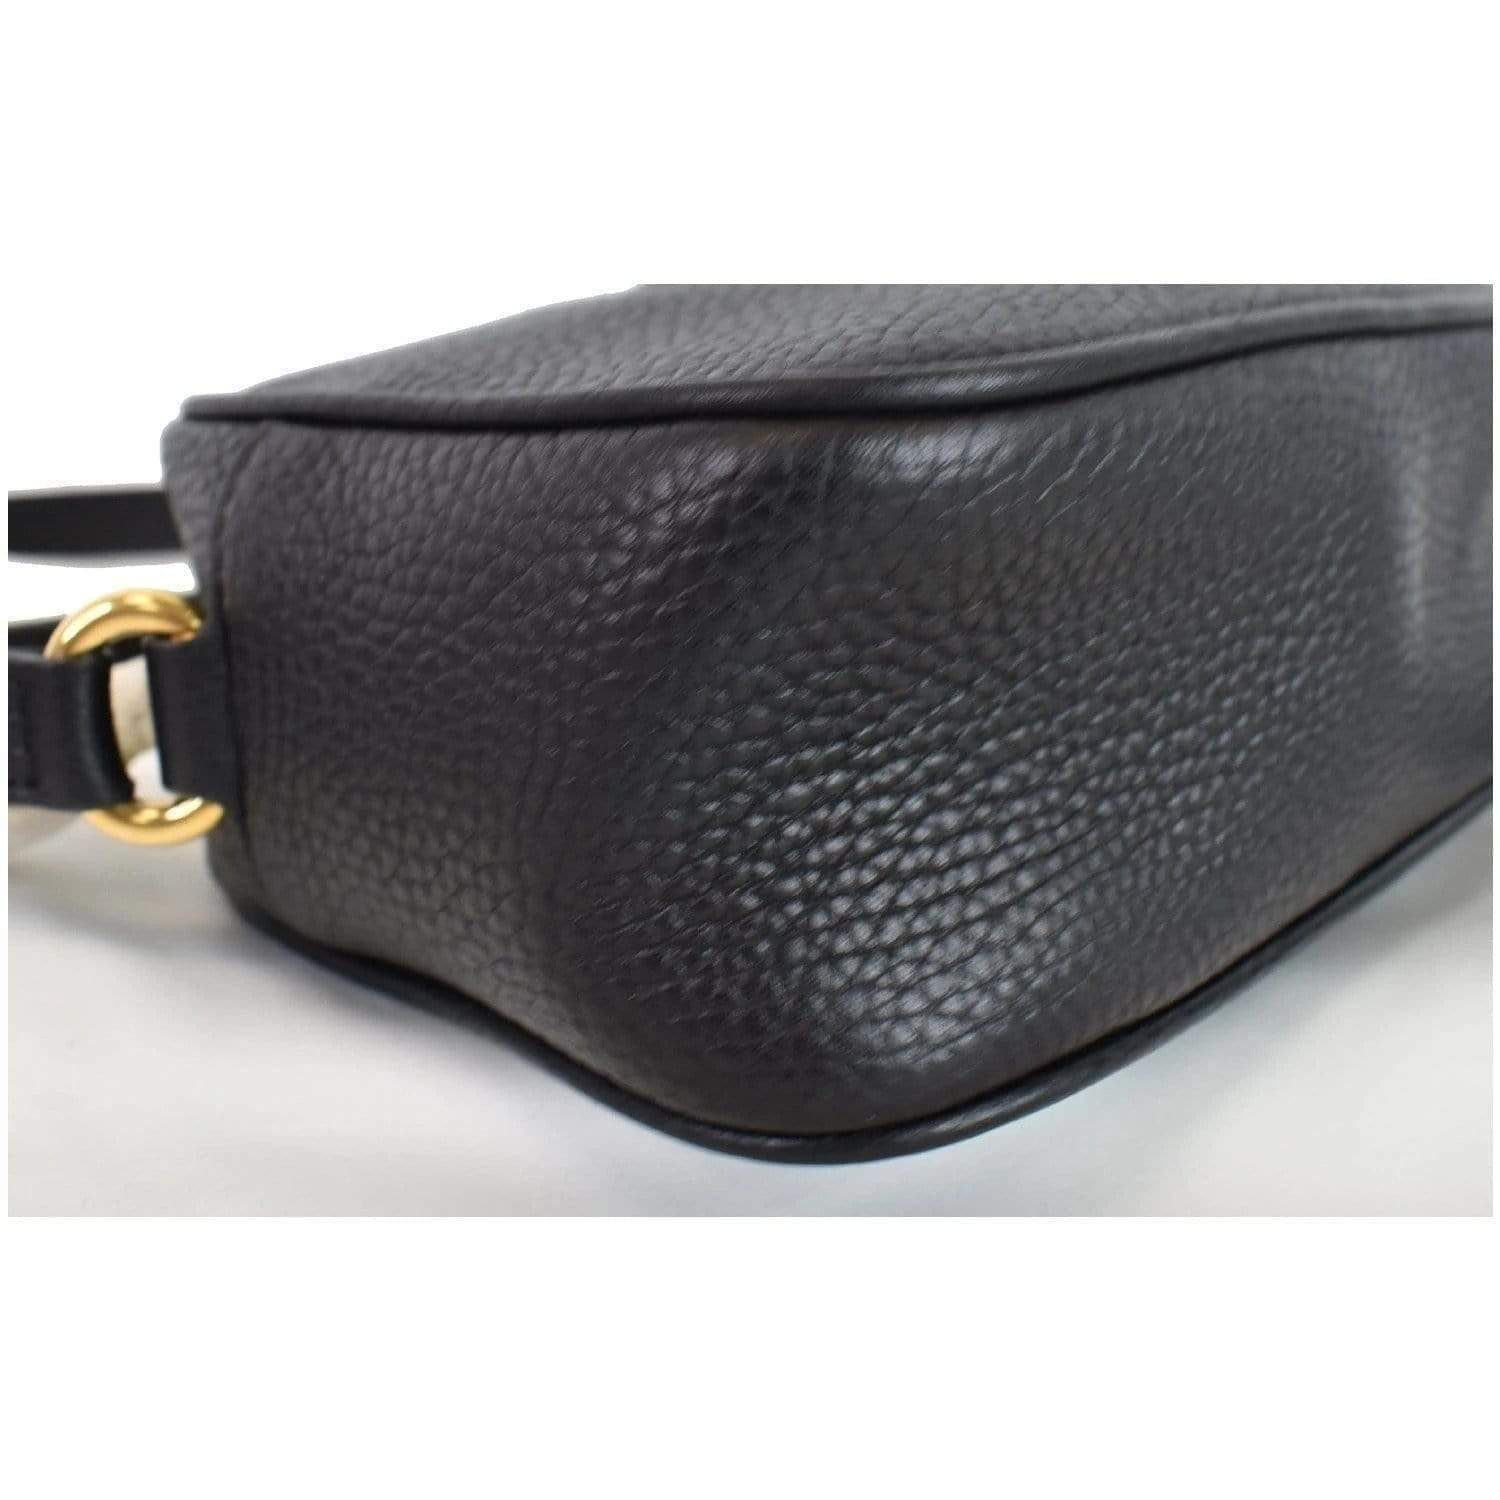 GUCCI Soho Disco Small Leather Crossbody Bag Black 347994 - 15% OFF